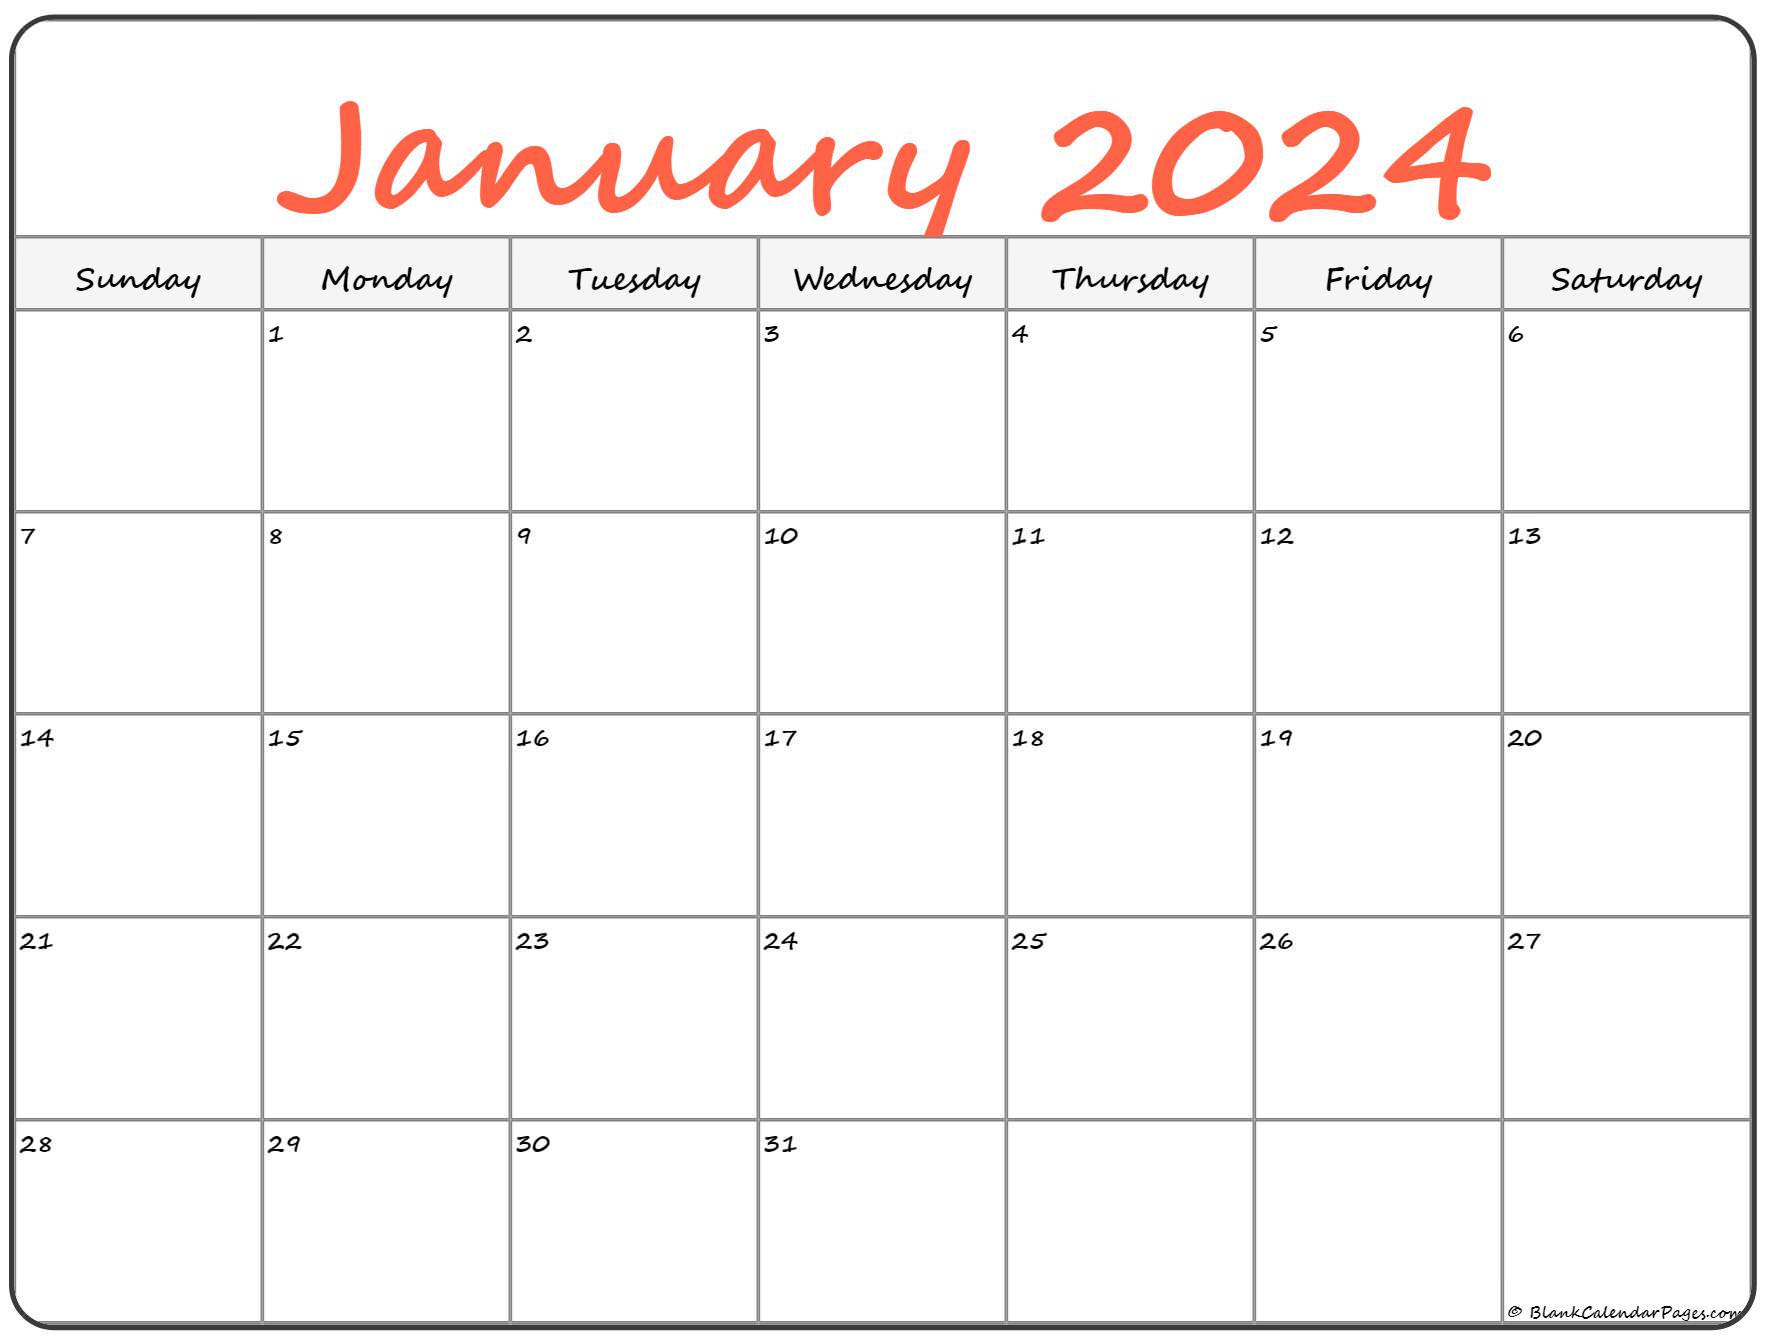 January 2022 calendar | free printable monthly calendars